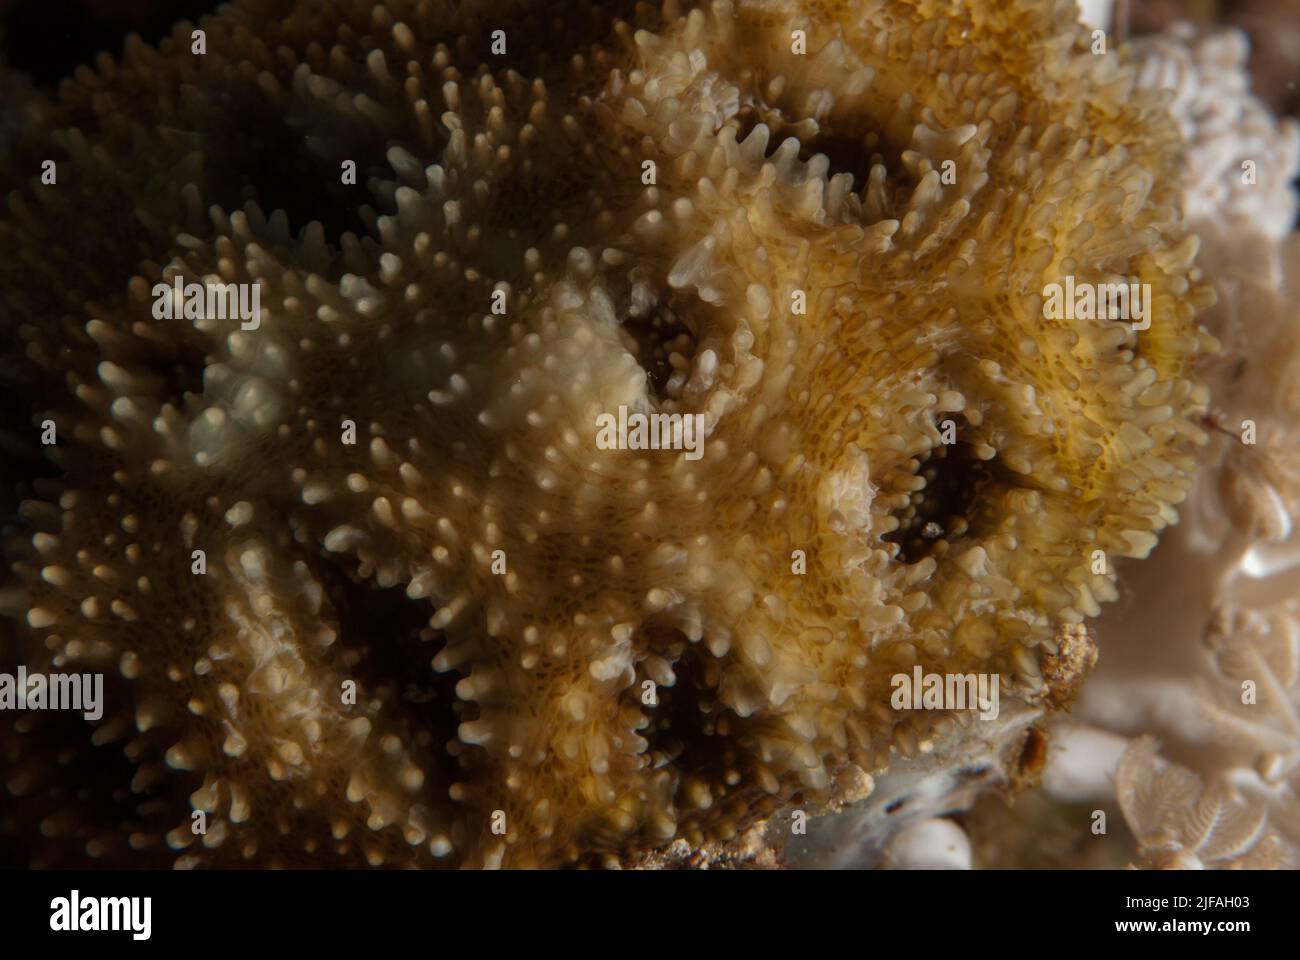 Corallo di pietra, Acanthastrea echinata, Lobophylliidae, Sharm el Sheikh Mar Rosso, Egitto Foto Stock